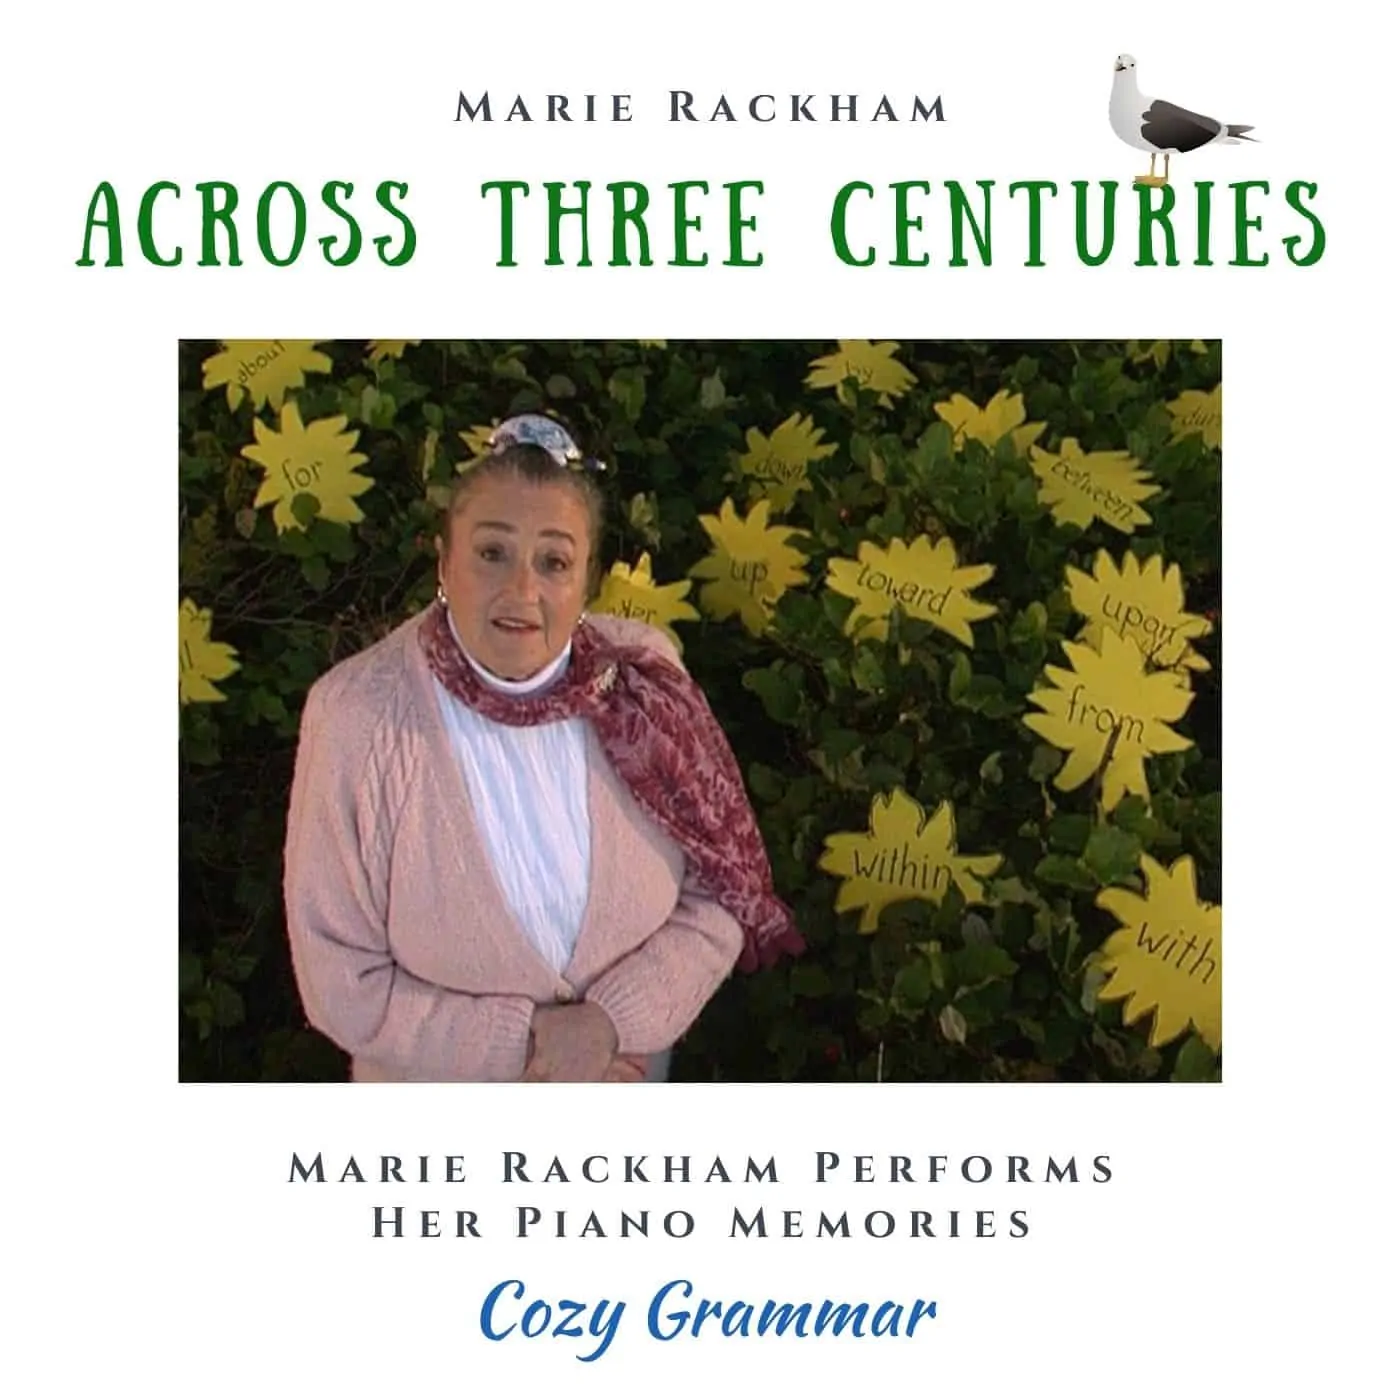 Across Three Centuries: Marie Rackham performs her piano memories